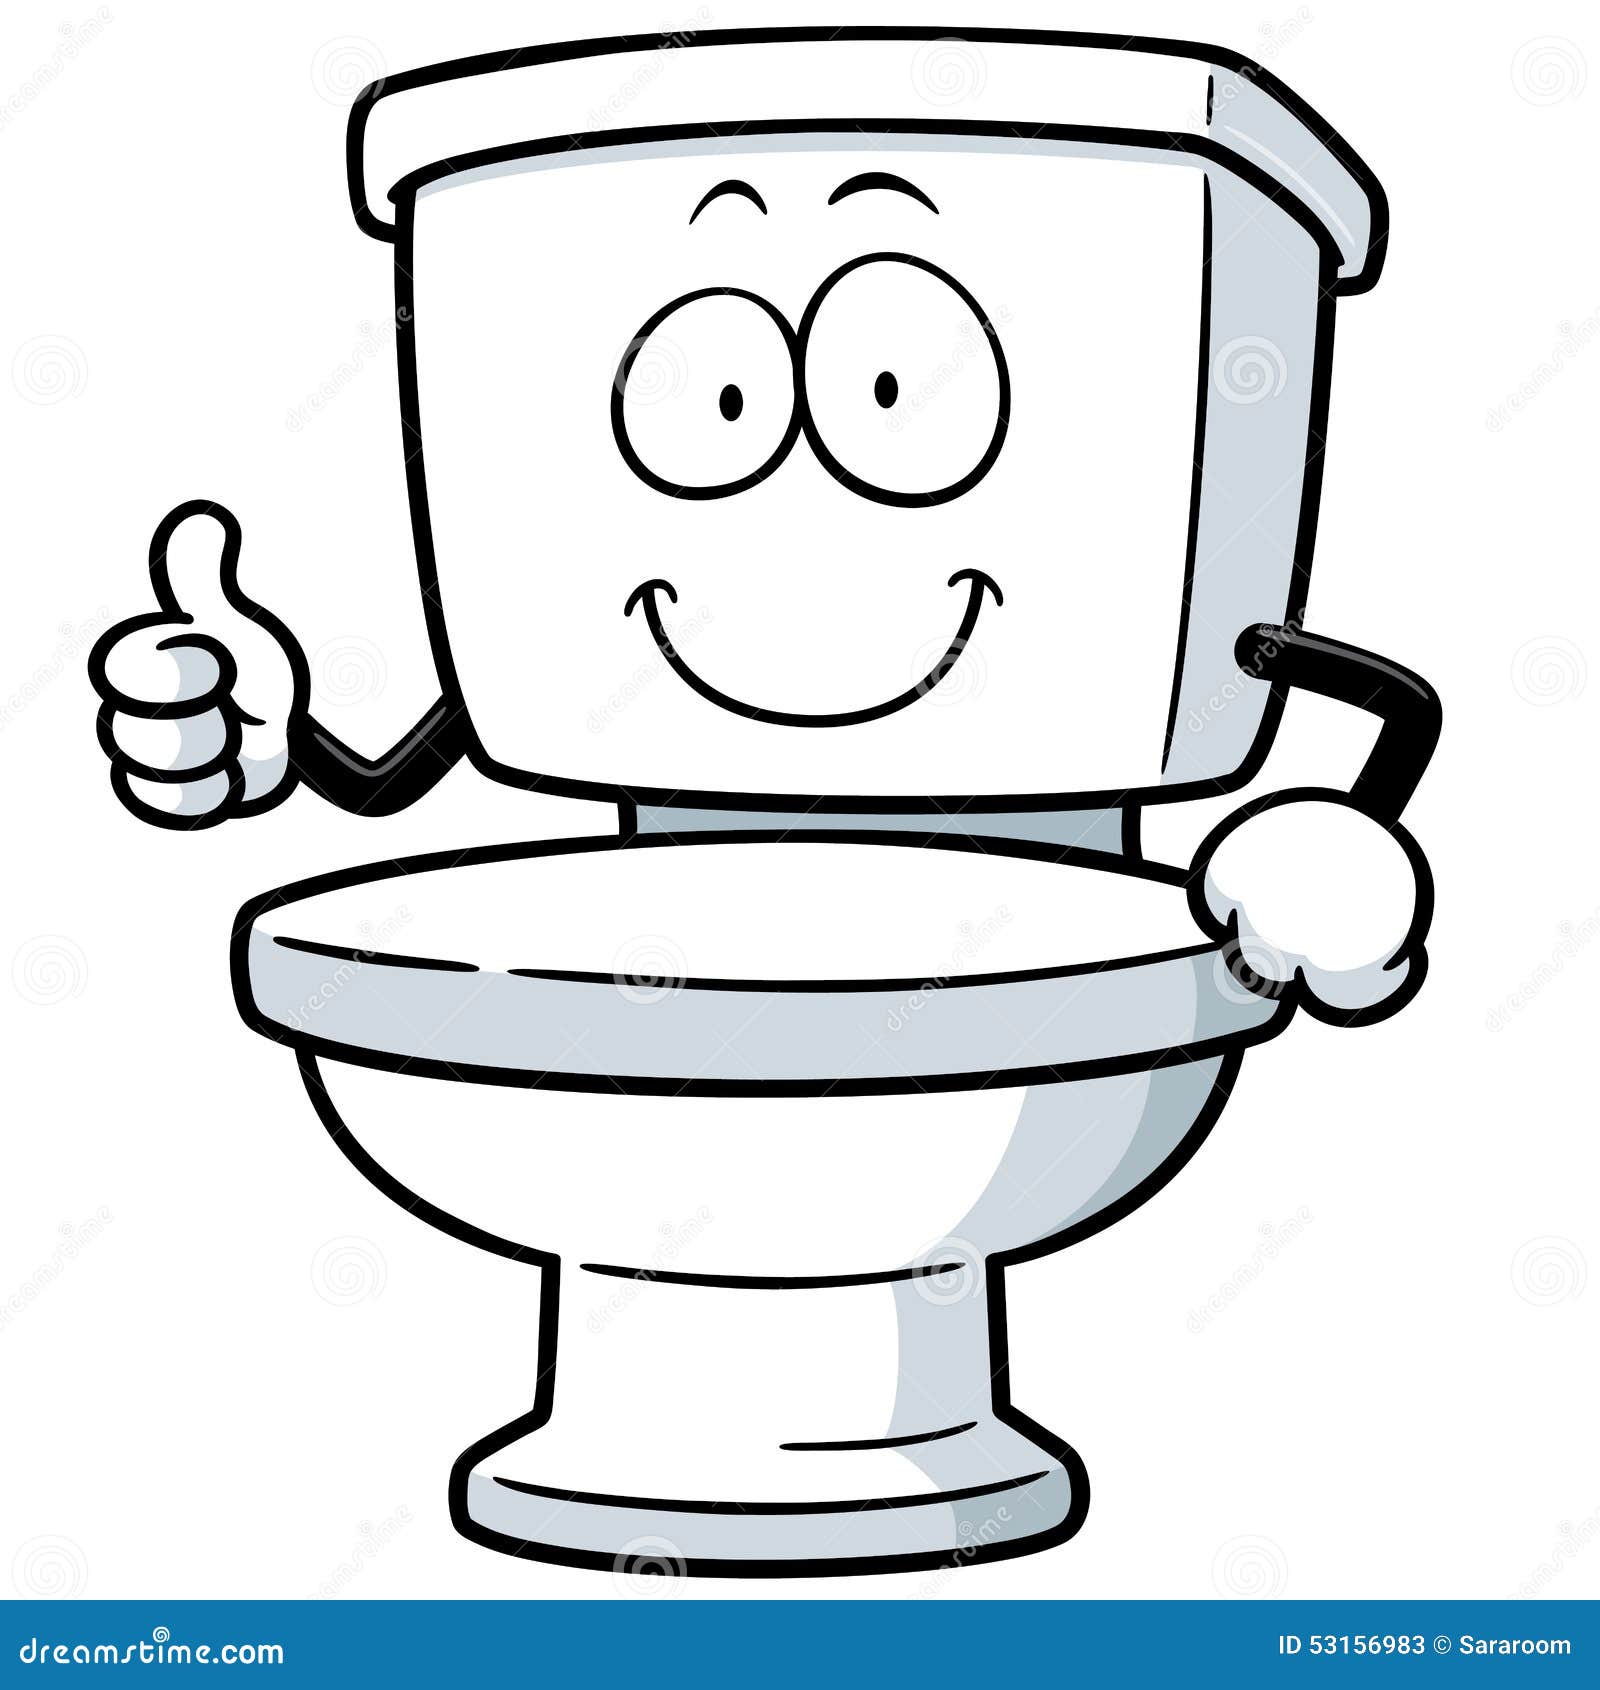 Toilet Stock Vector - Image: 53156983